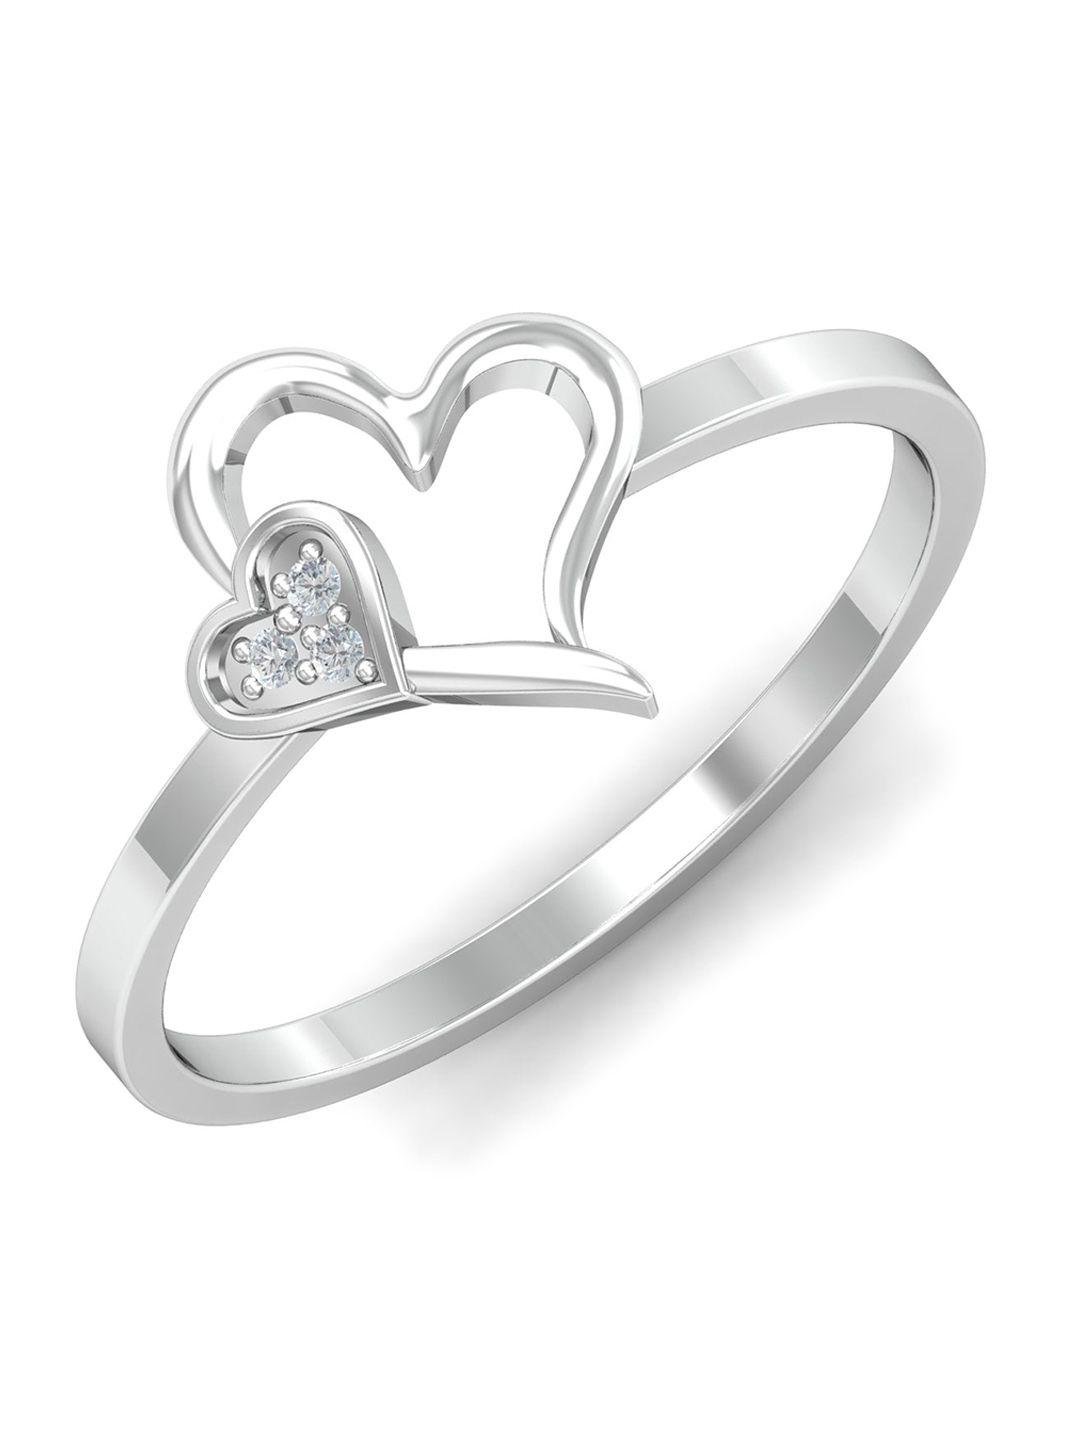 kuberbox charming love 18kt white gold diamond ring-1.55gm